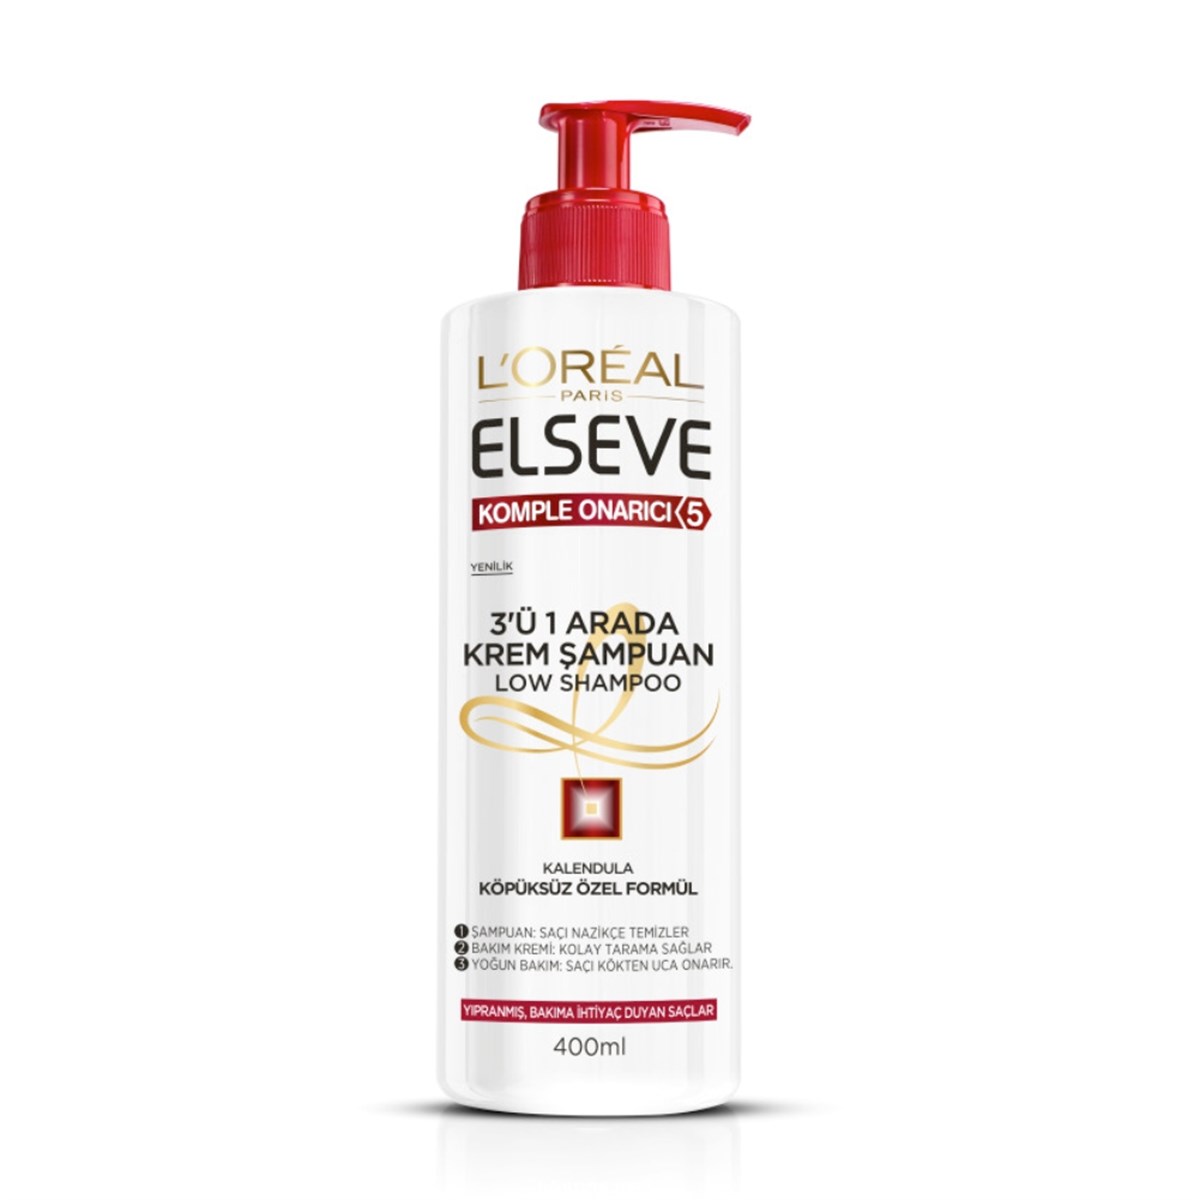 Elseve 3'ü 1 Arada Krem Şampuan Komple Onarıcı 5 400 ml - Platin